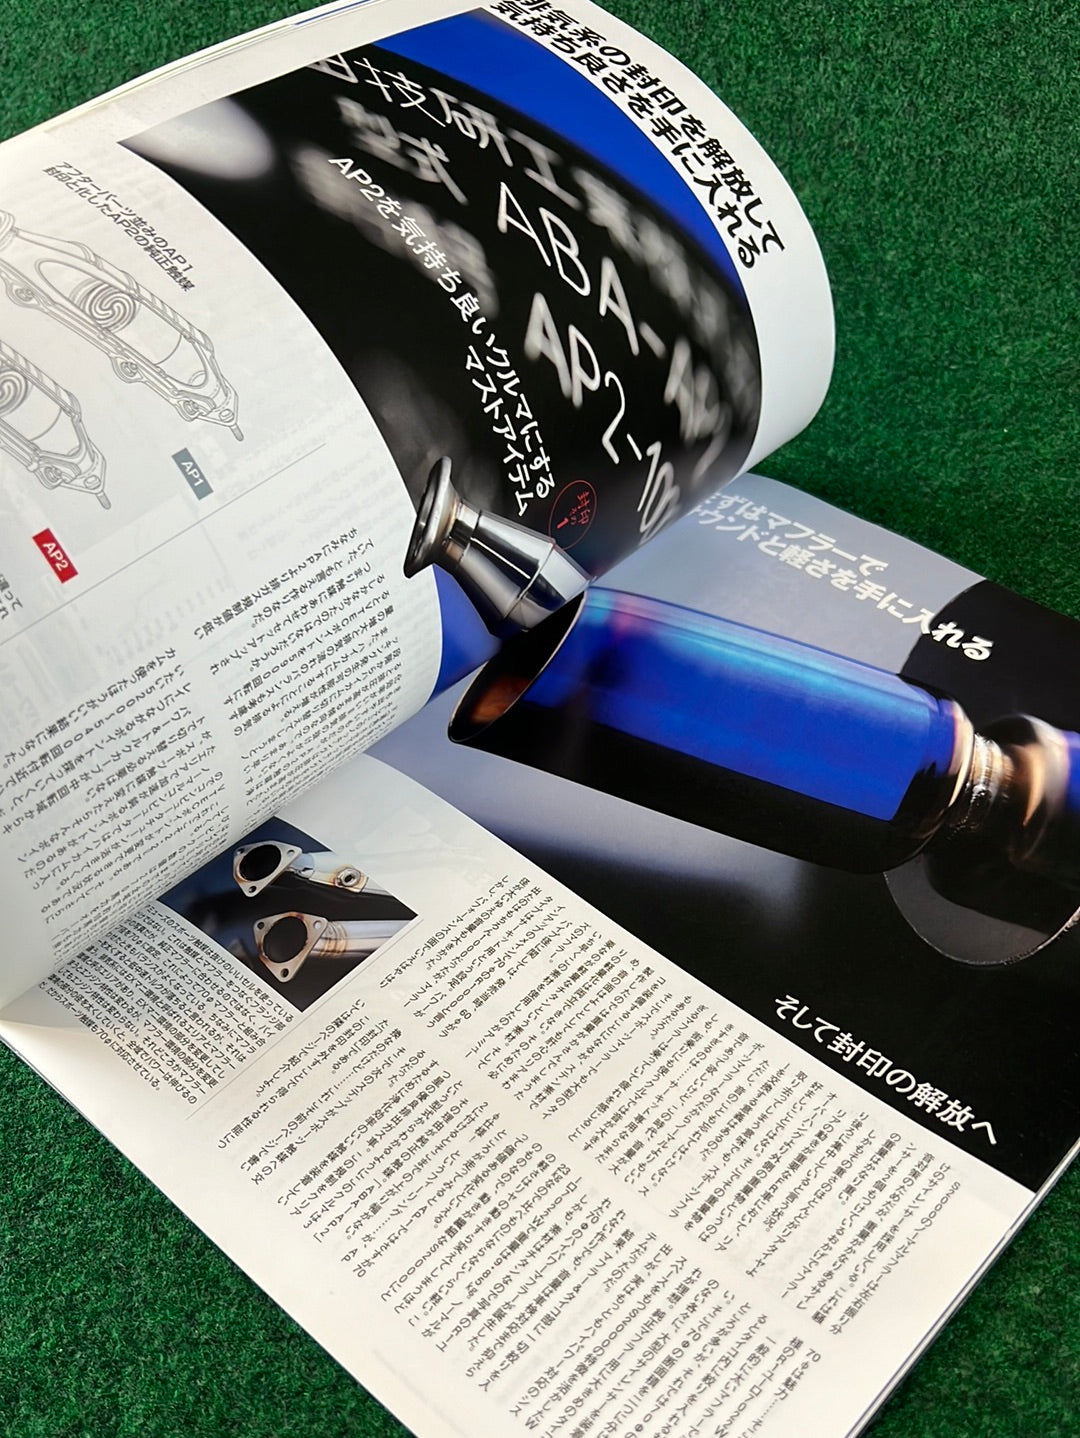 Hyper Rev Magazine - Honda S2000 Vol. 131 No. 5